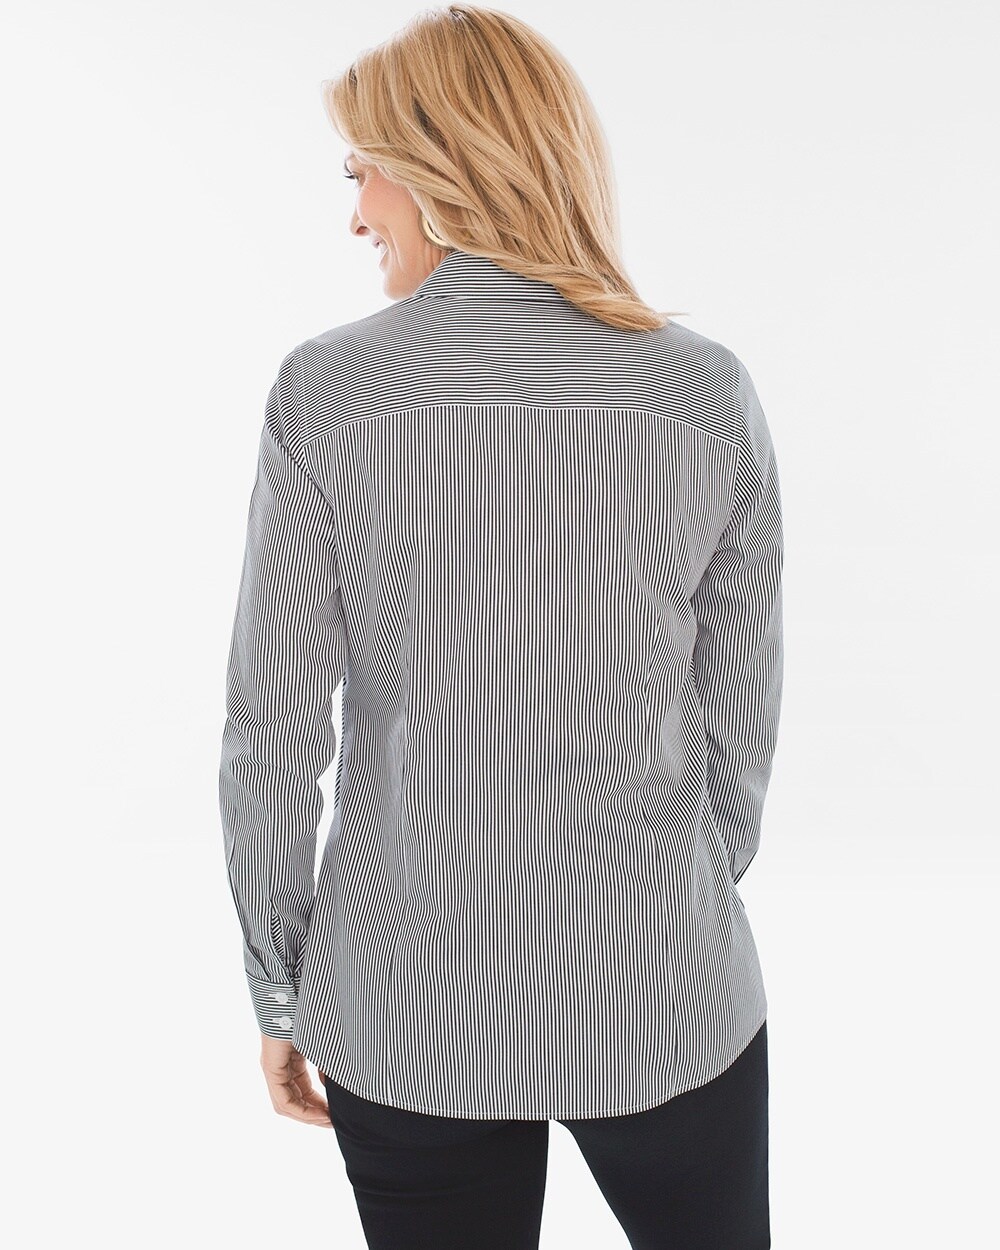 No-Iron Sateen Caroline Micro-Striped Shirt